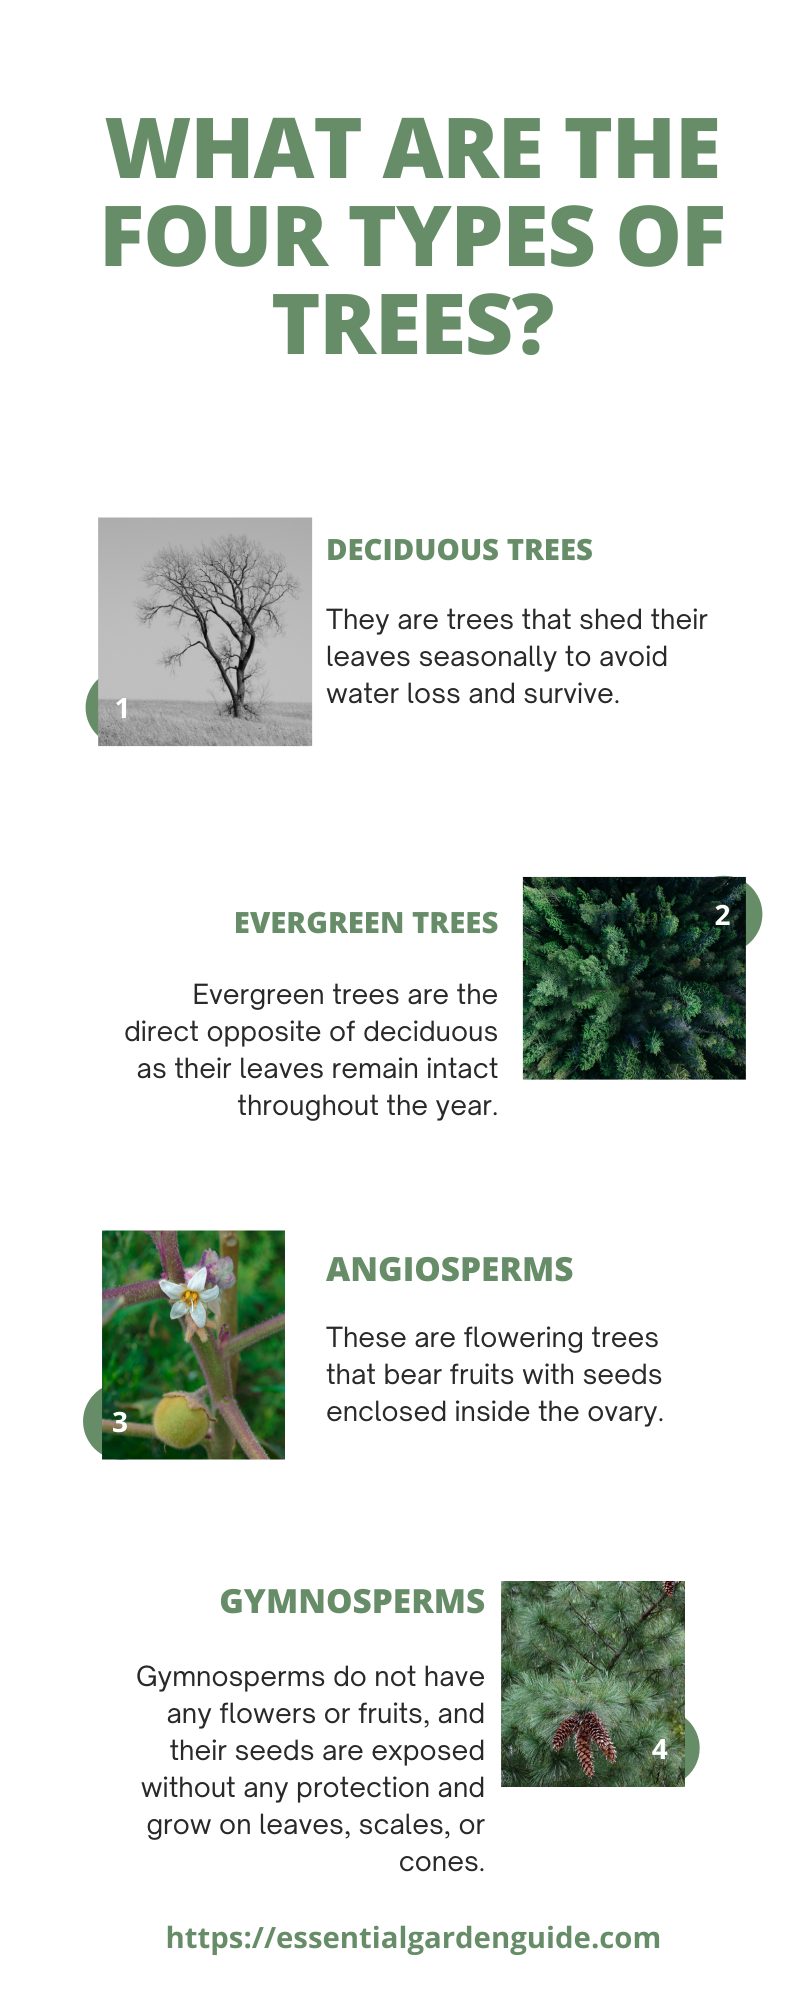 Deciduous, Evergreen, Angiopserm, Hymnosperm tree clasifications